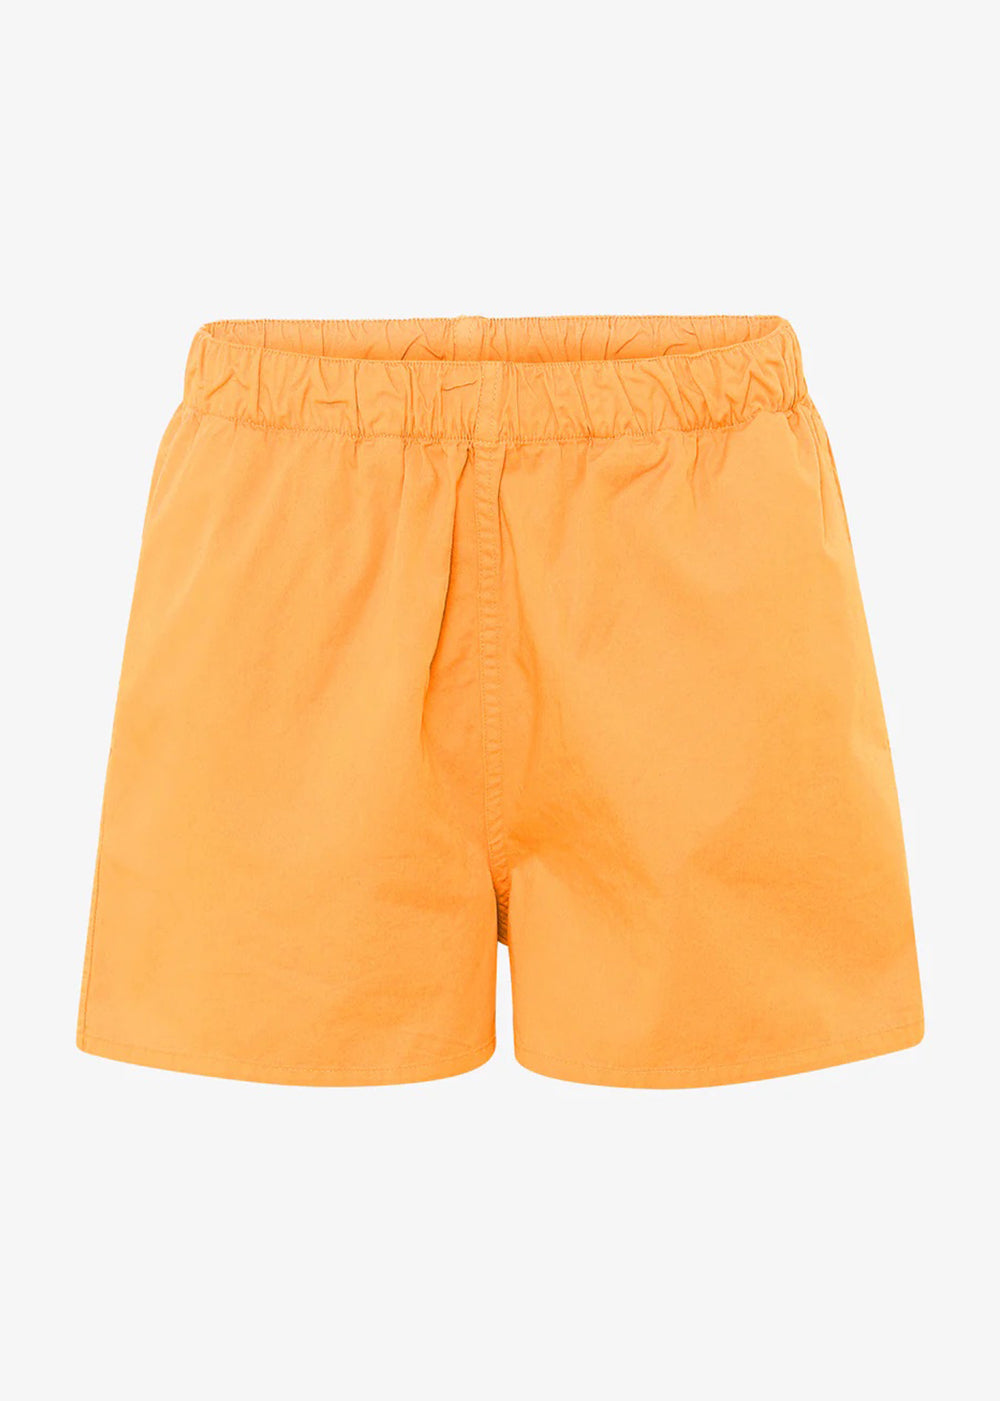 Women's Organic Twill Shorts - Sandstone Orange - Colorful Standard Canada - Danali